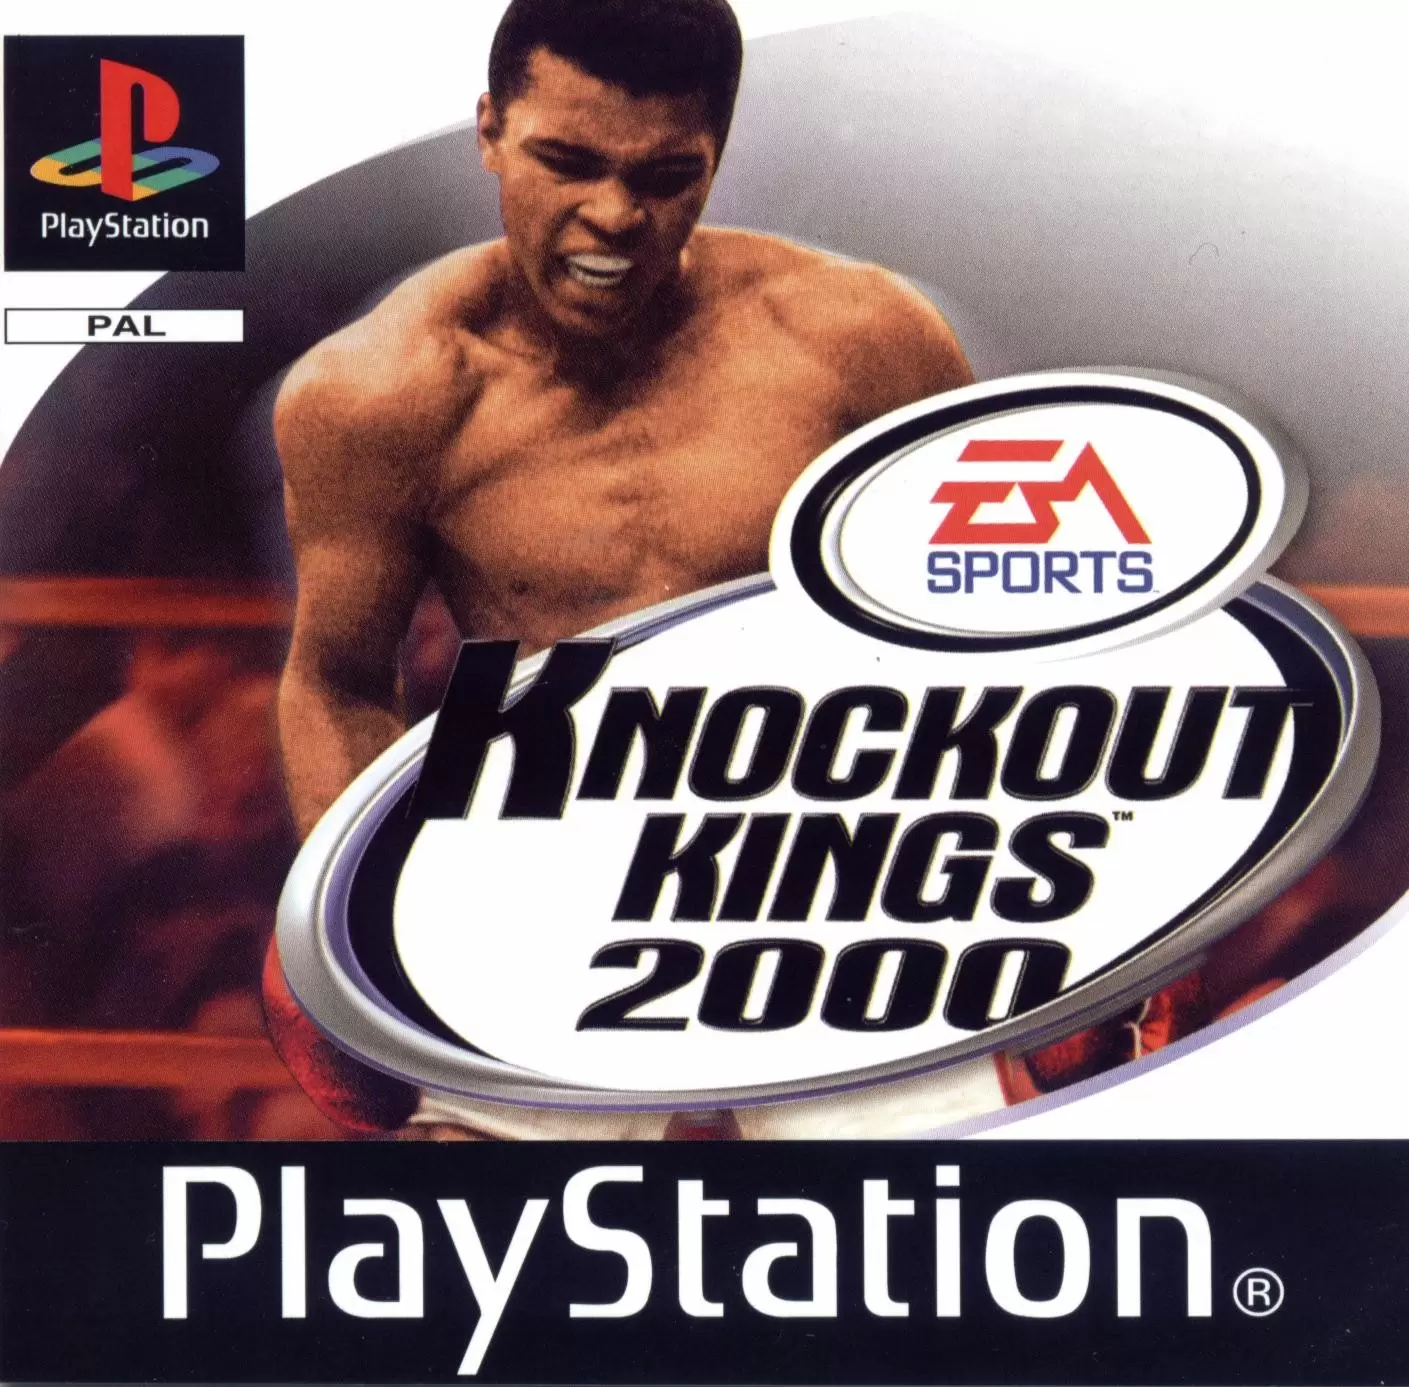 Jeux Playstation PS1 - Knockout Kings 2000